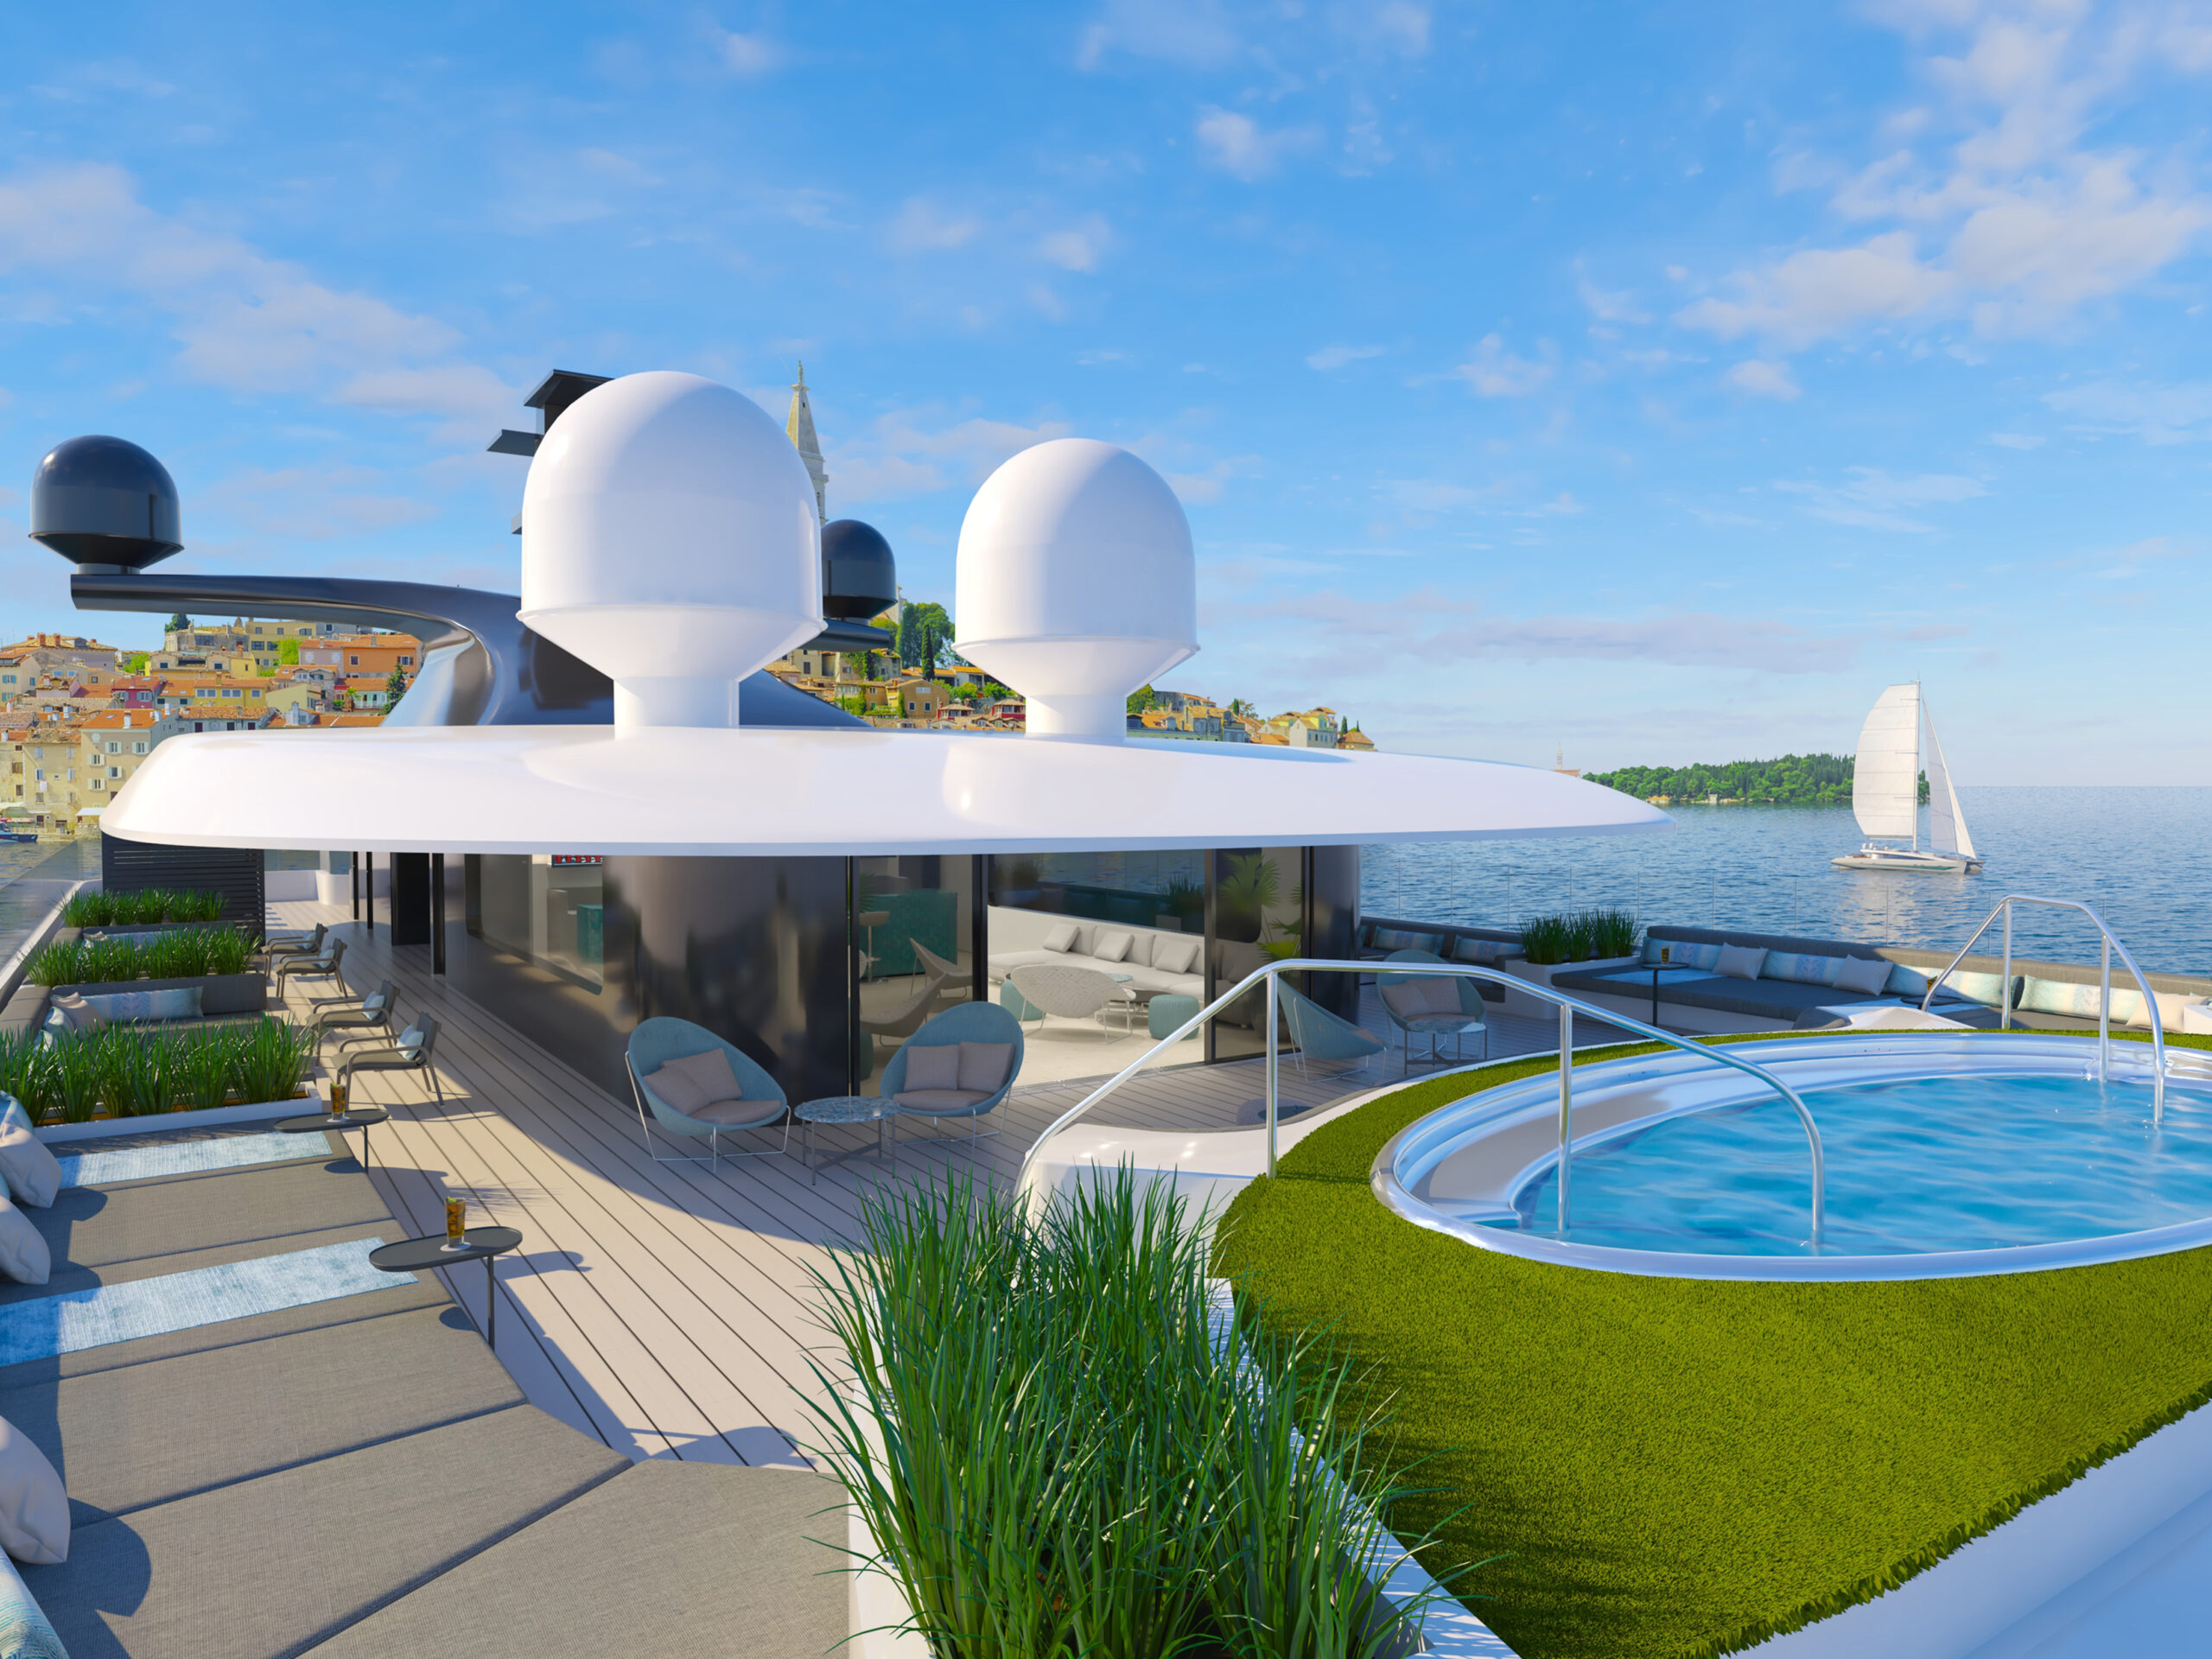 An impresison of The Sky Bar & Spa Pool, Emerald Kaia